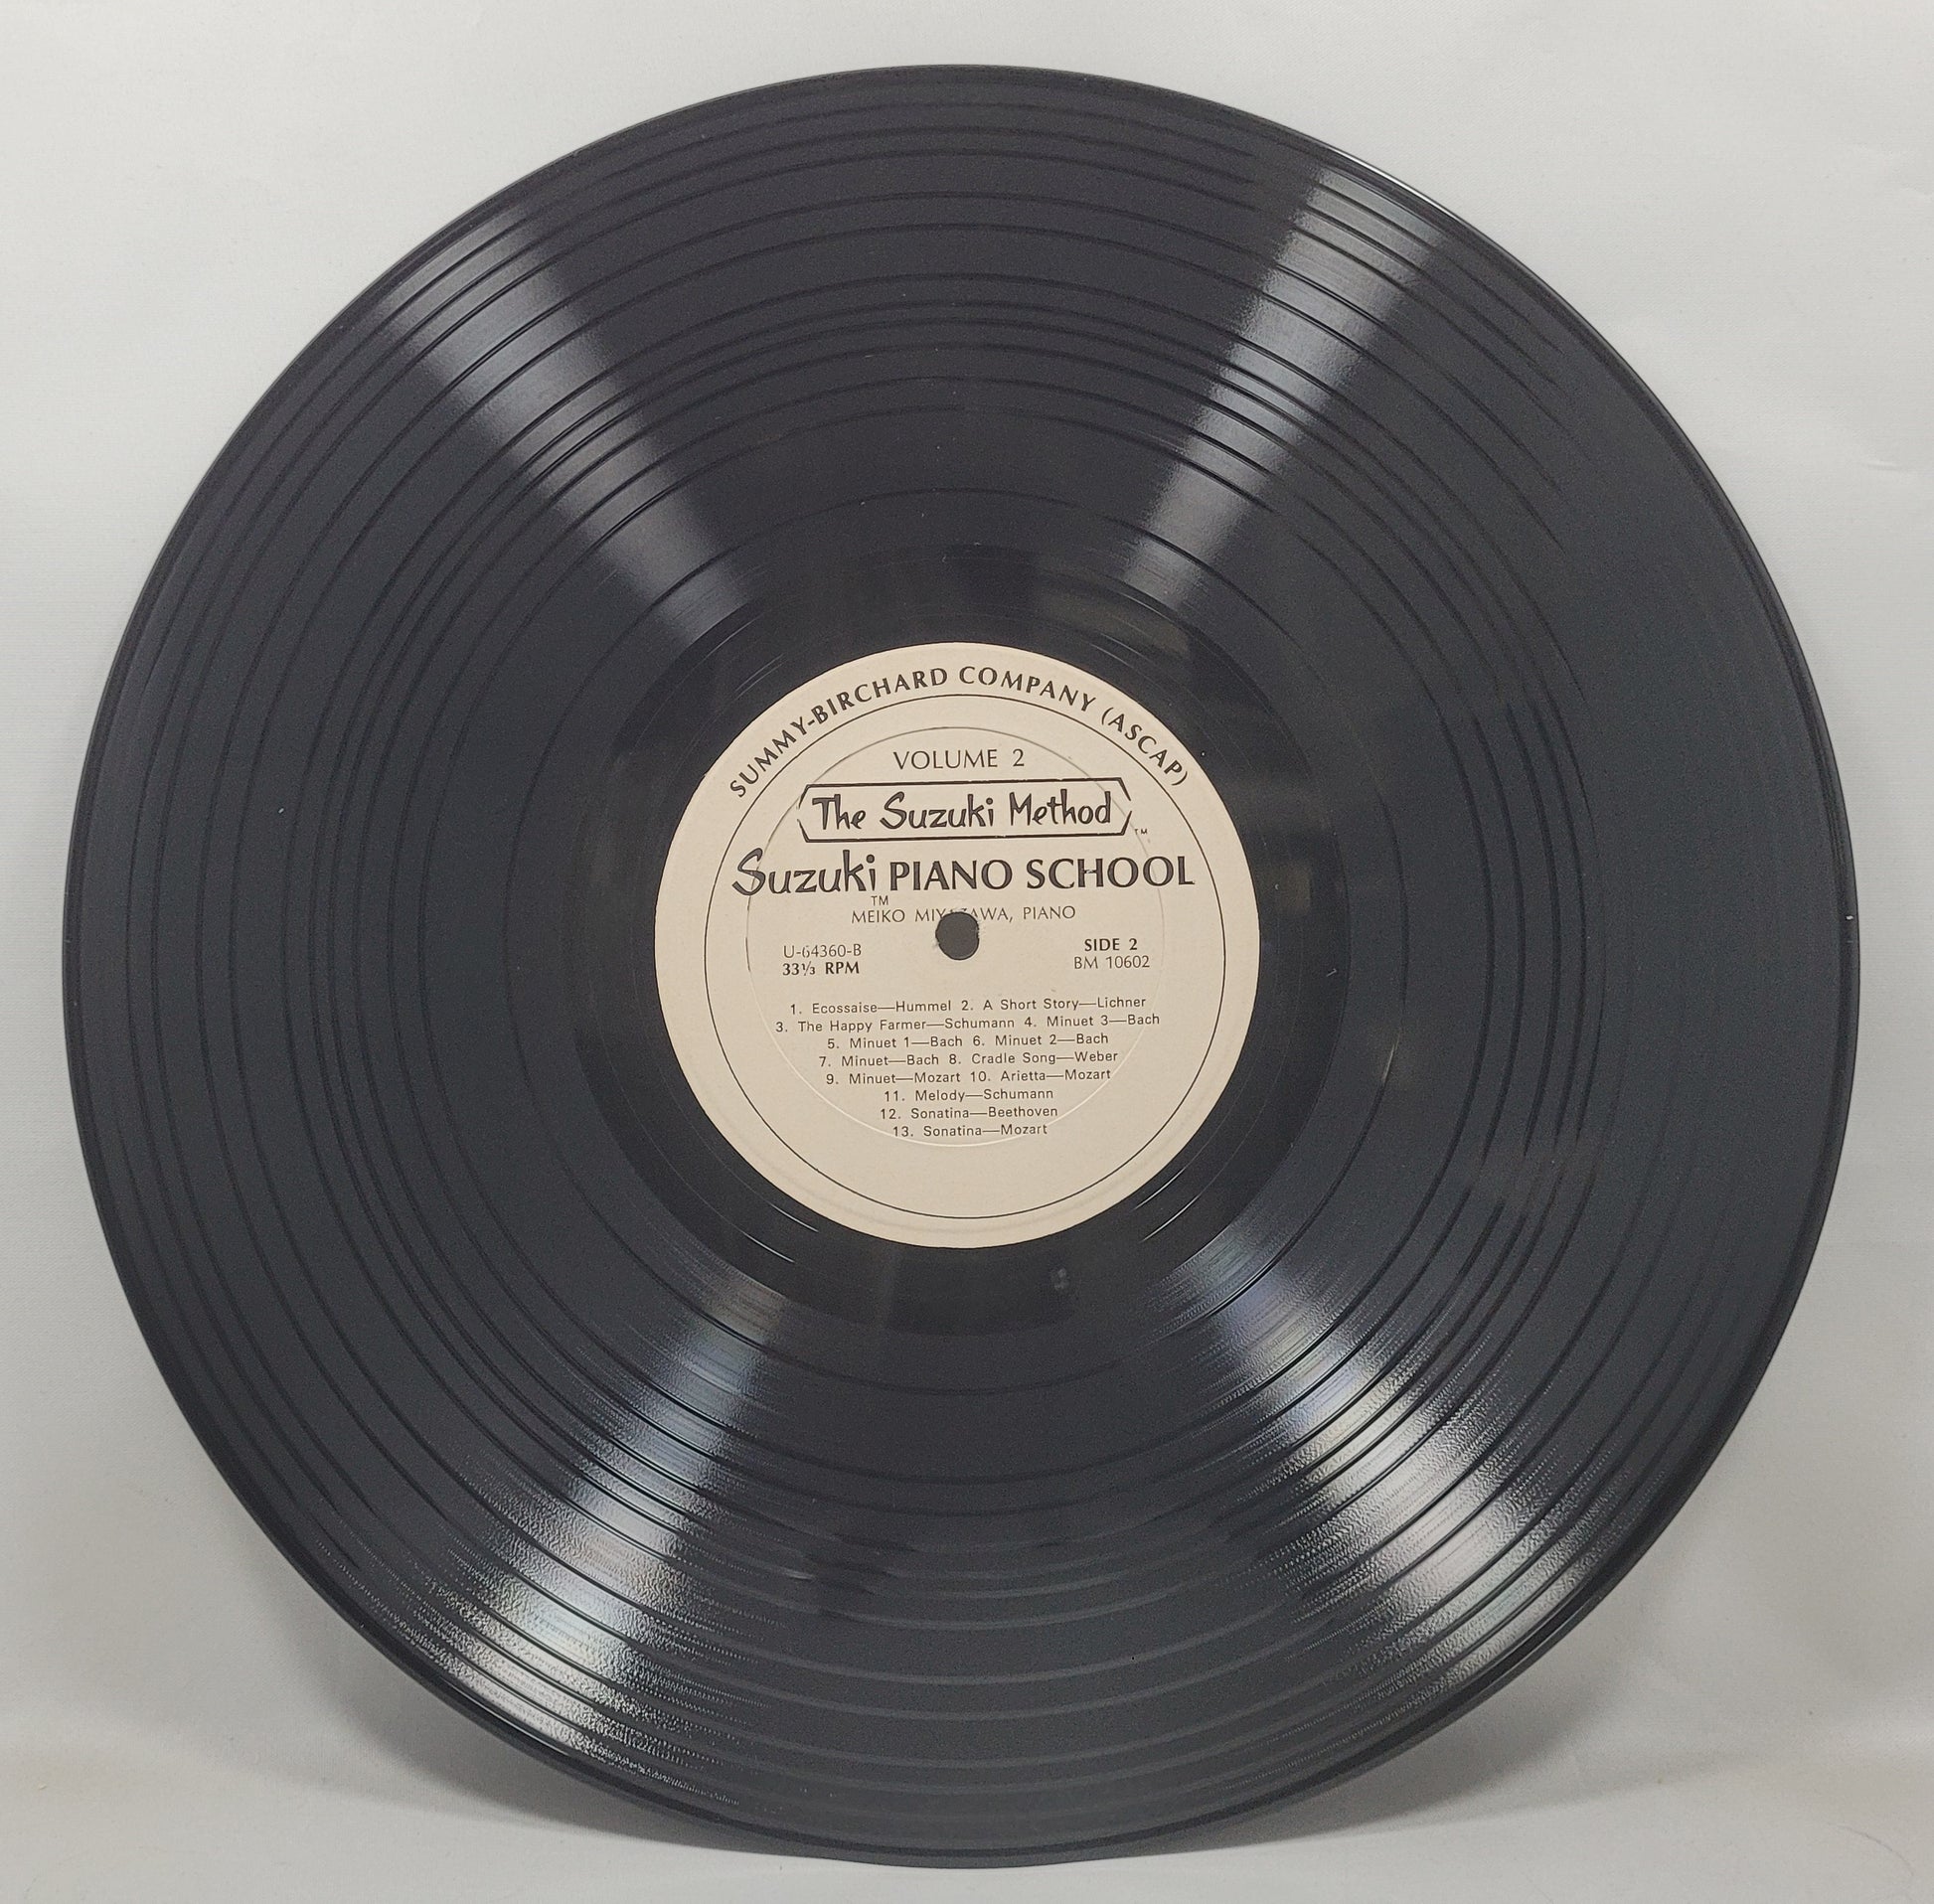 Meiko Miyazawa - Suzuki Piano School, Vol. 1 & Vol. 2 [Used Vinyl Record LP]